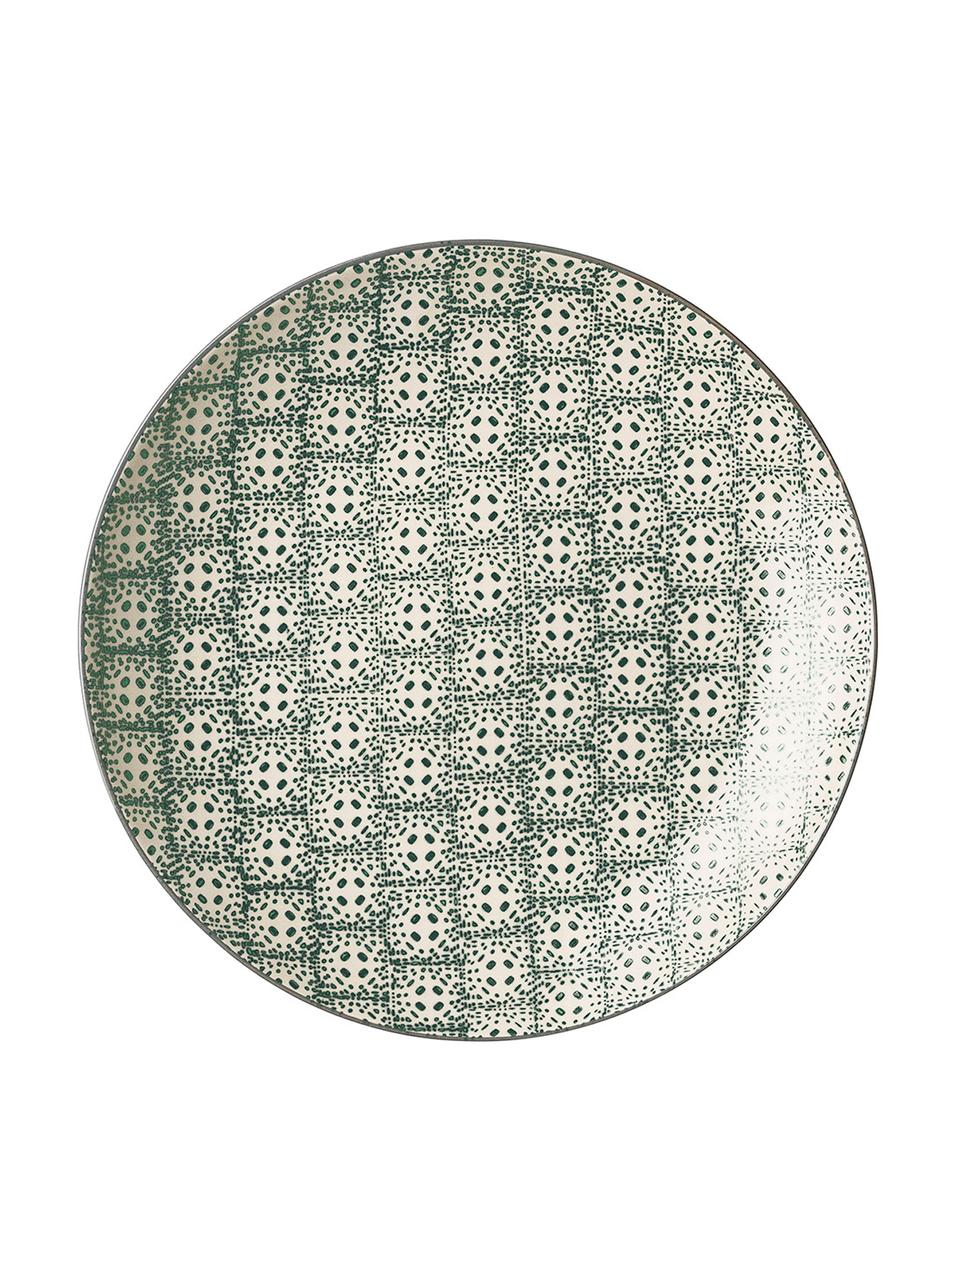 Dinerborden Karine, 4 stuks, Keramiek, Multicolour, Ø 25 cm